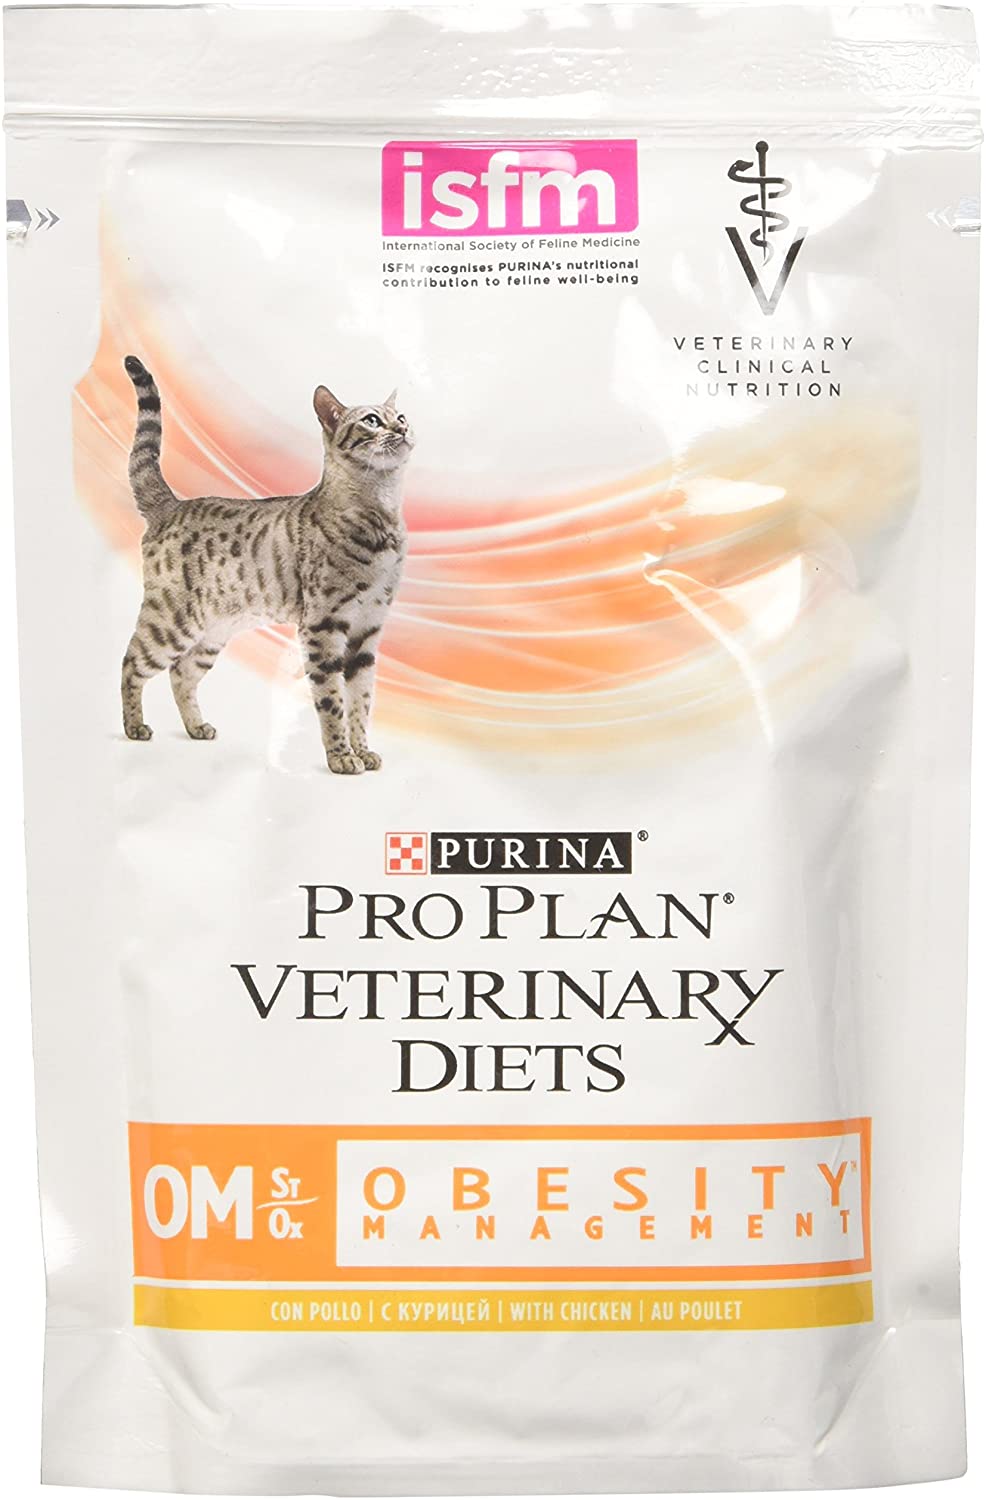  Purina Veterinary Diets - PRO PLAN Veterinary Diets FELINE OM Obesity Management - 85 g 